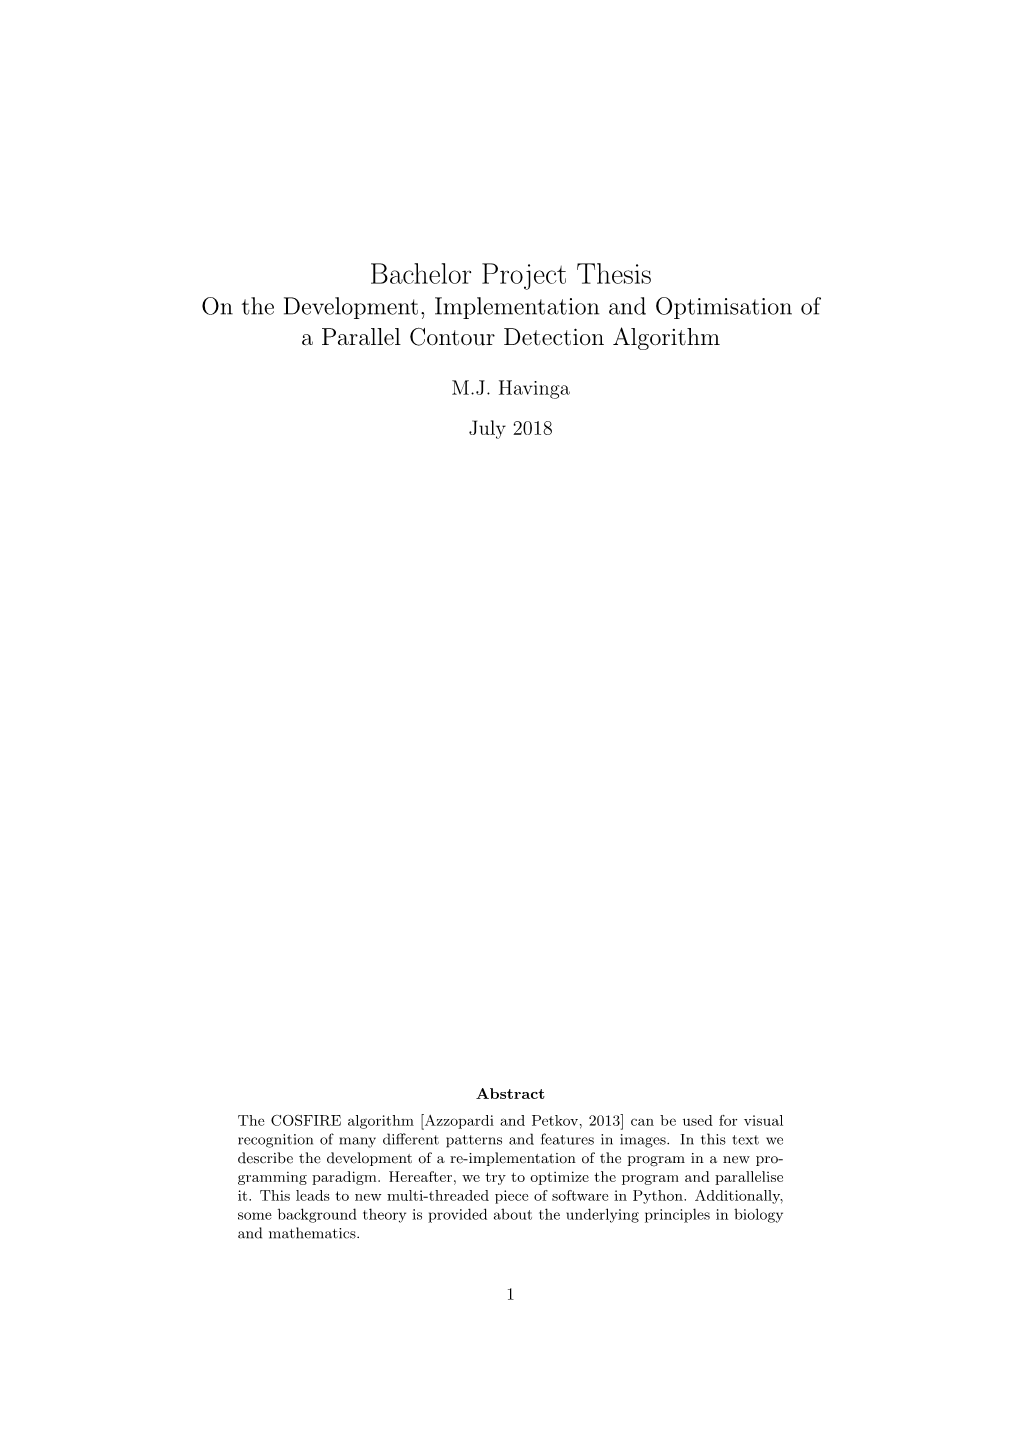 Bachelor Project Thesis on the Development, Implementation and Optimisation of a Parallel Contour Detection Algorithm